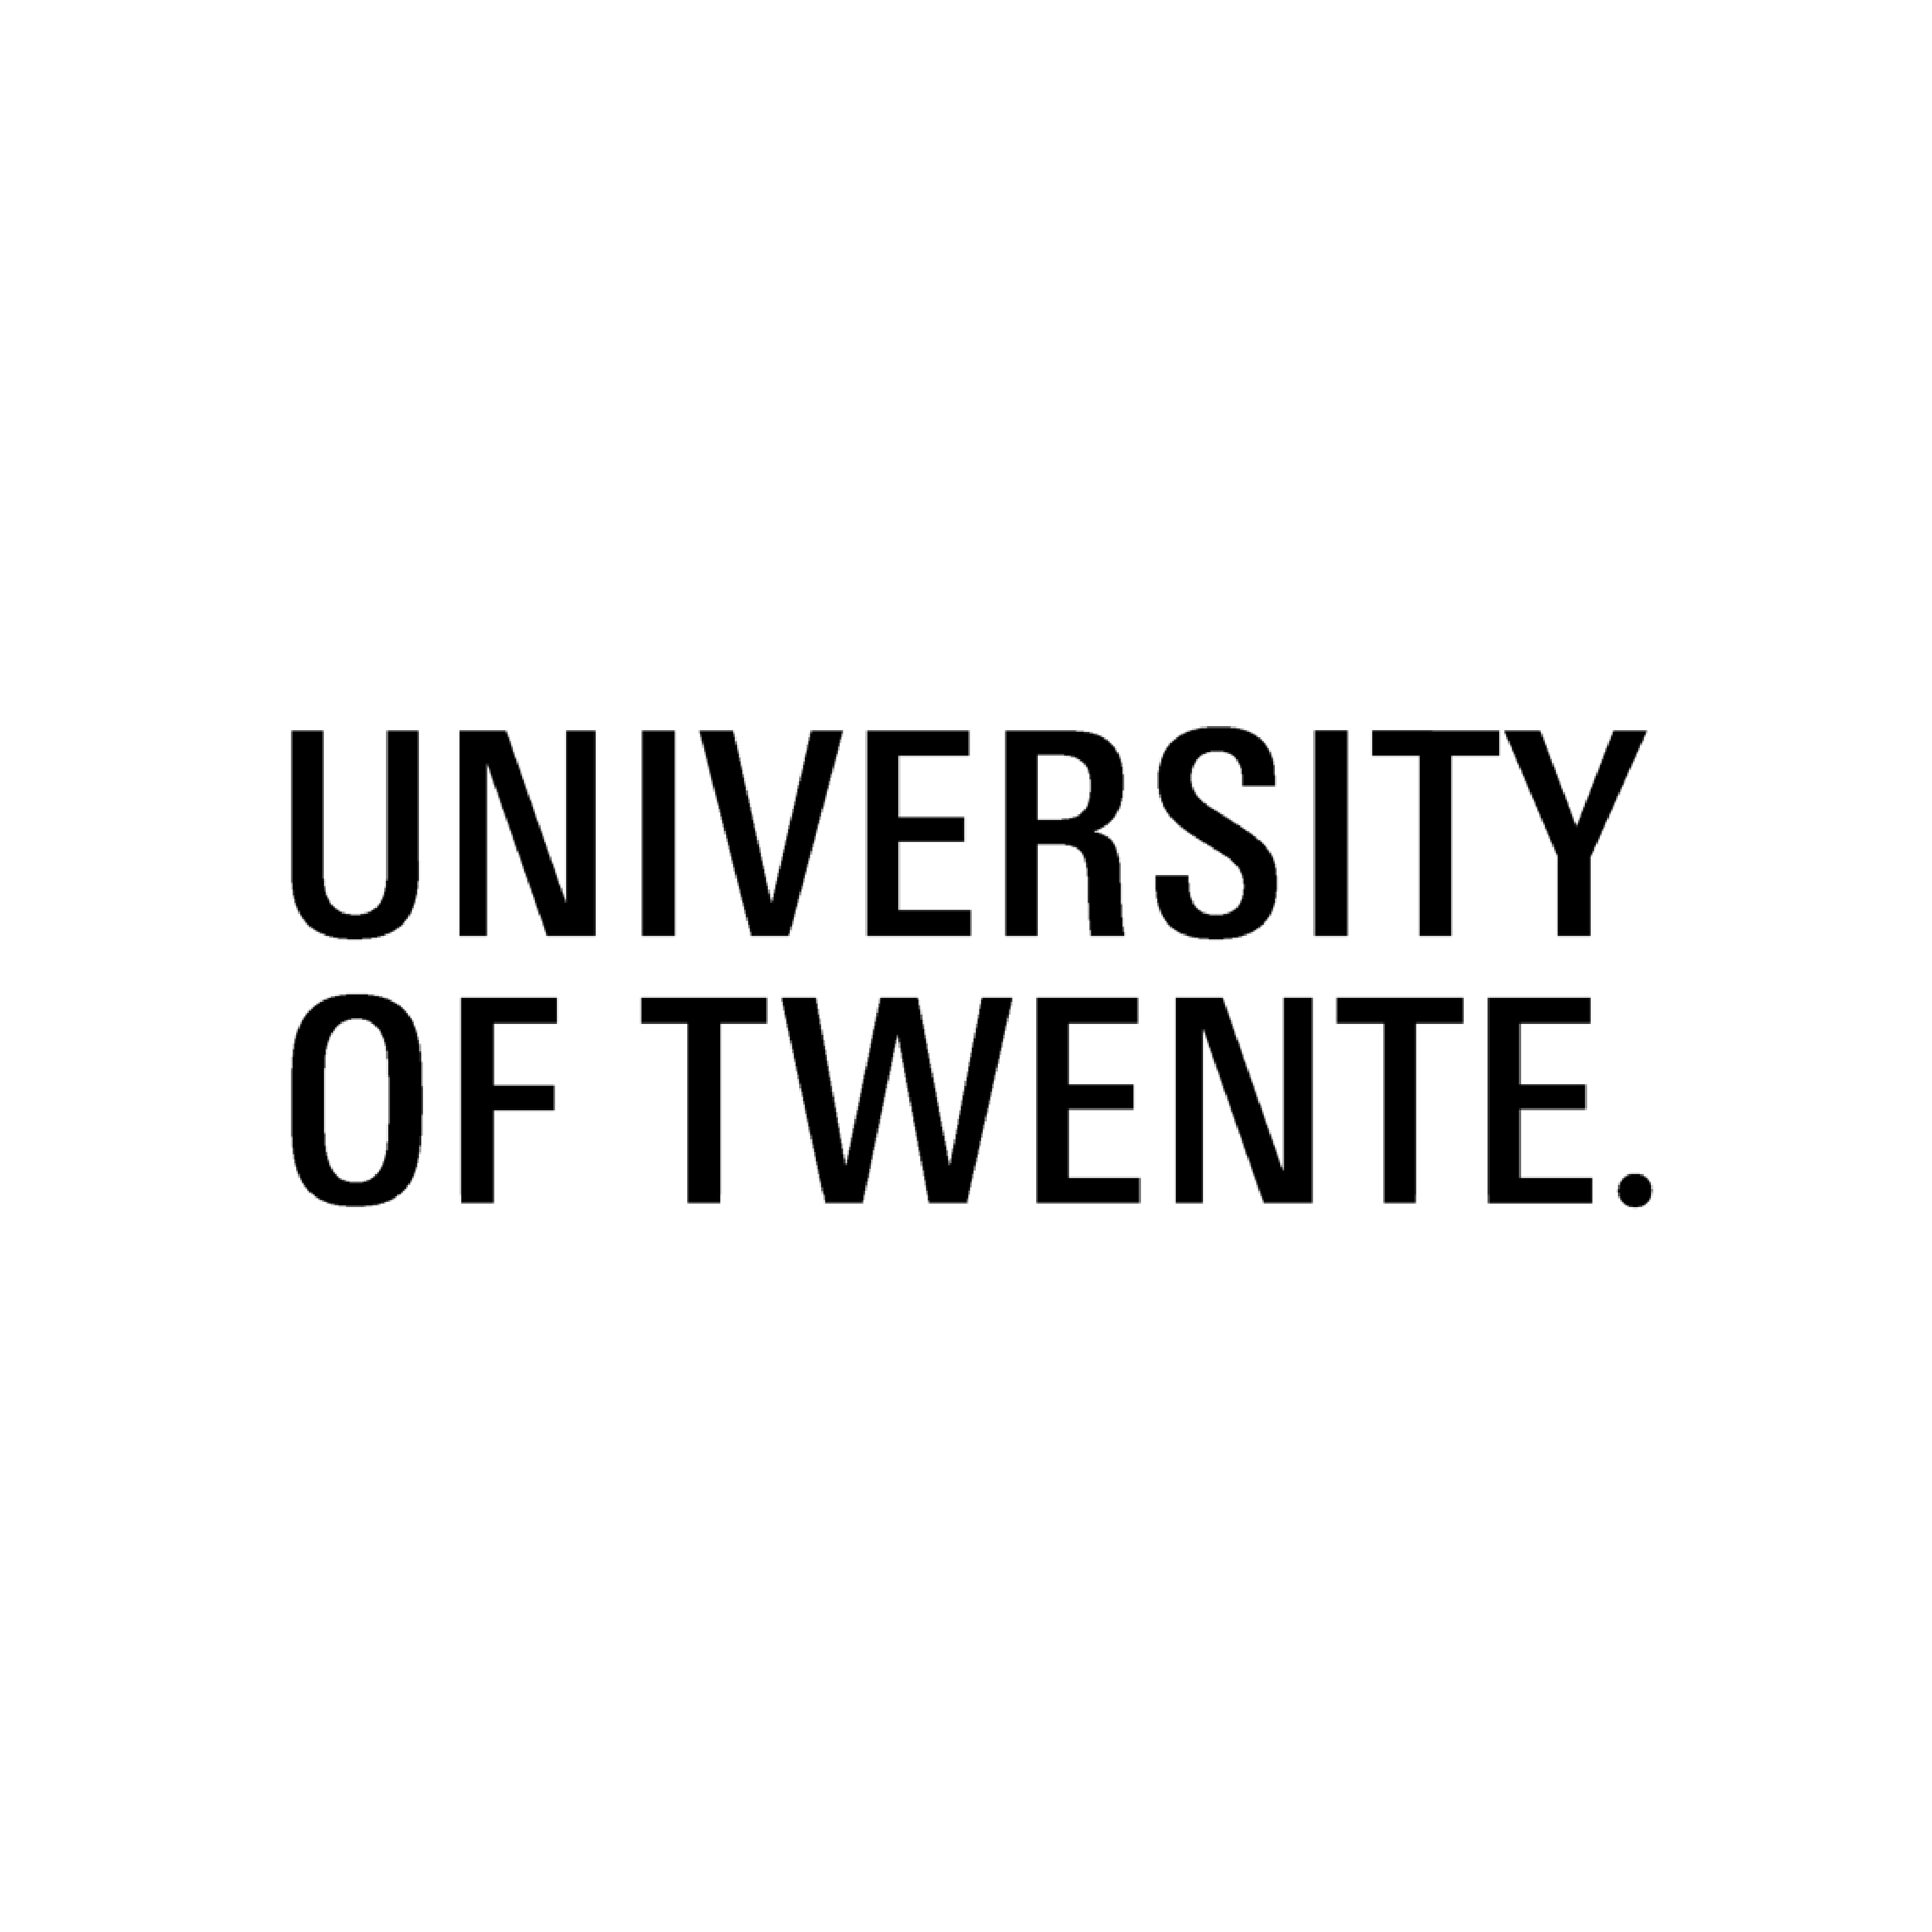 Logo Universiteit Twente